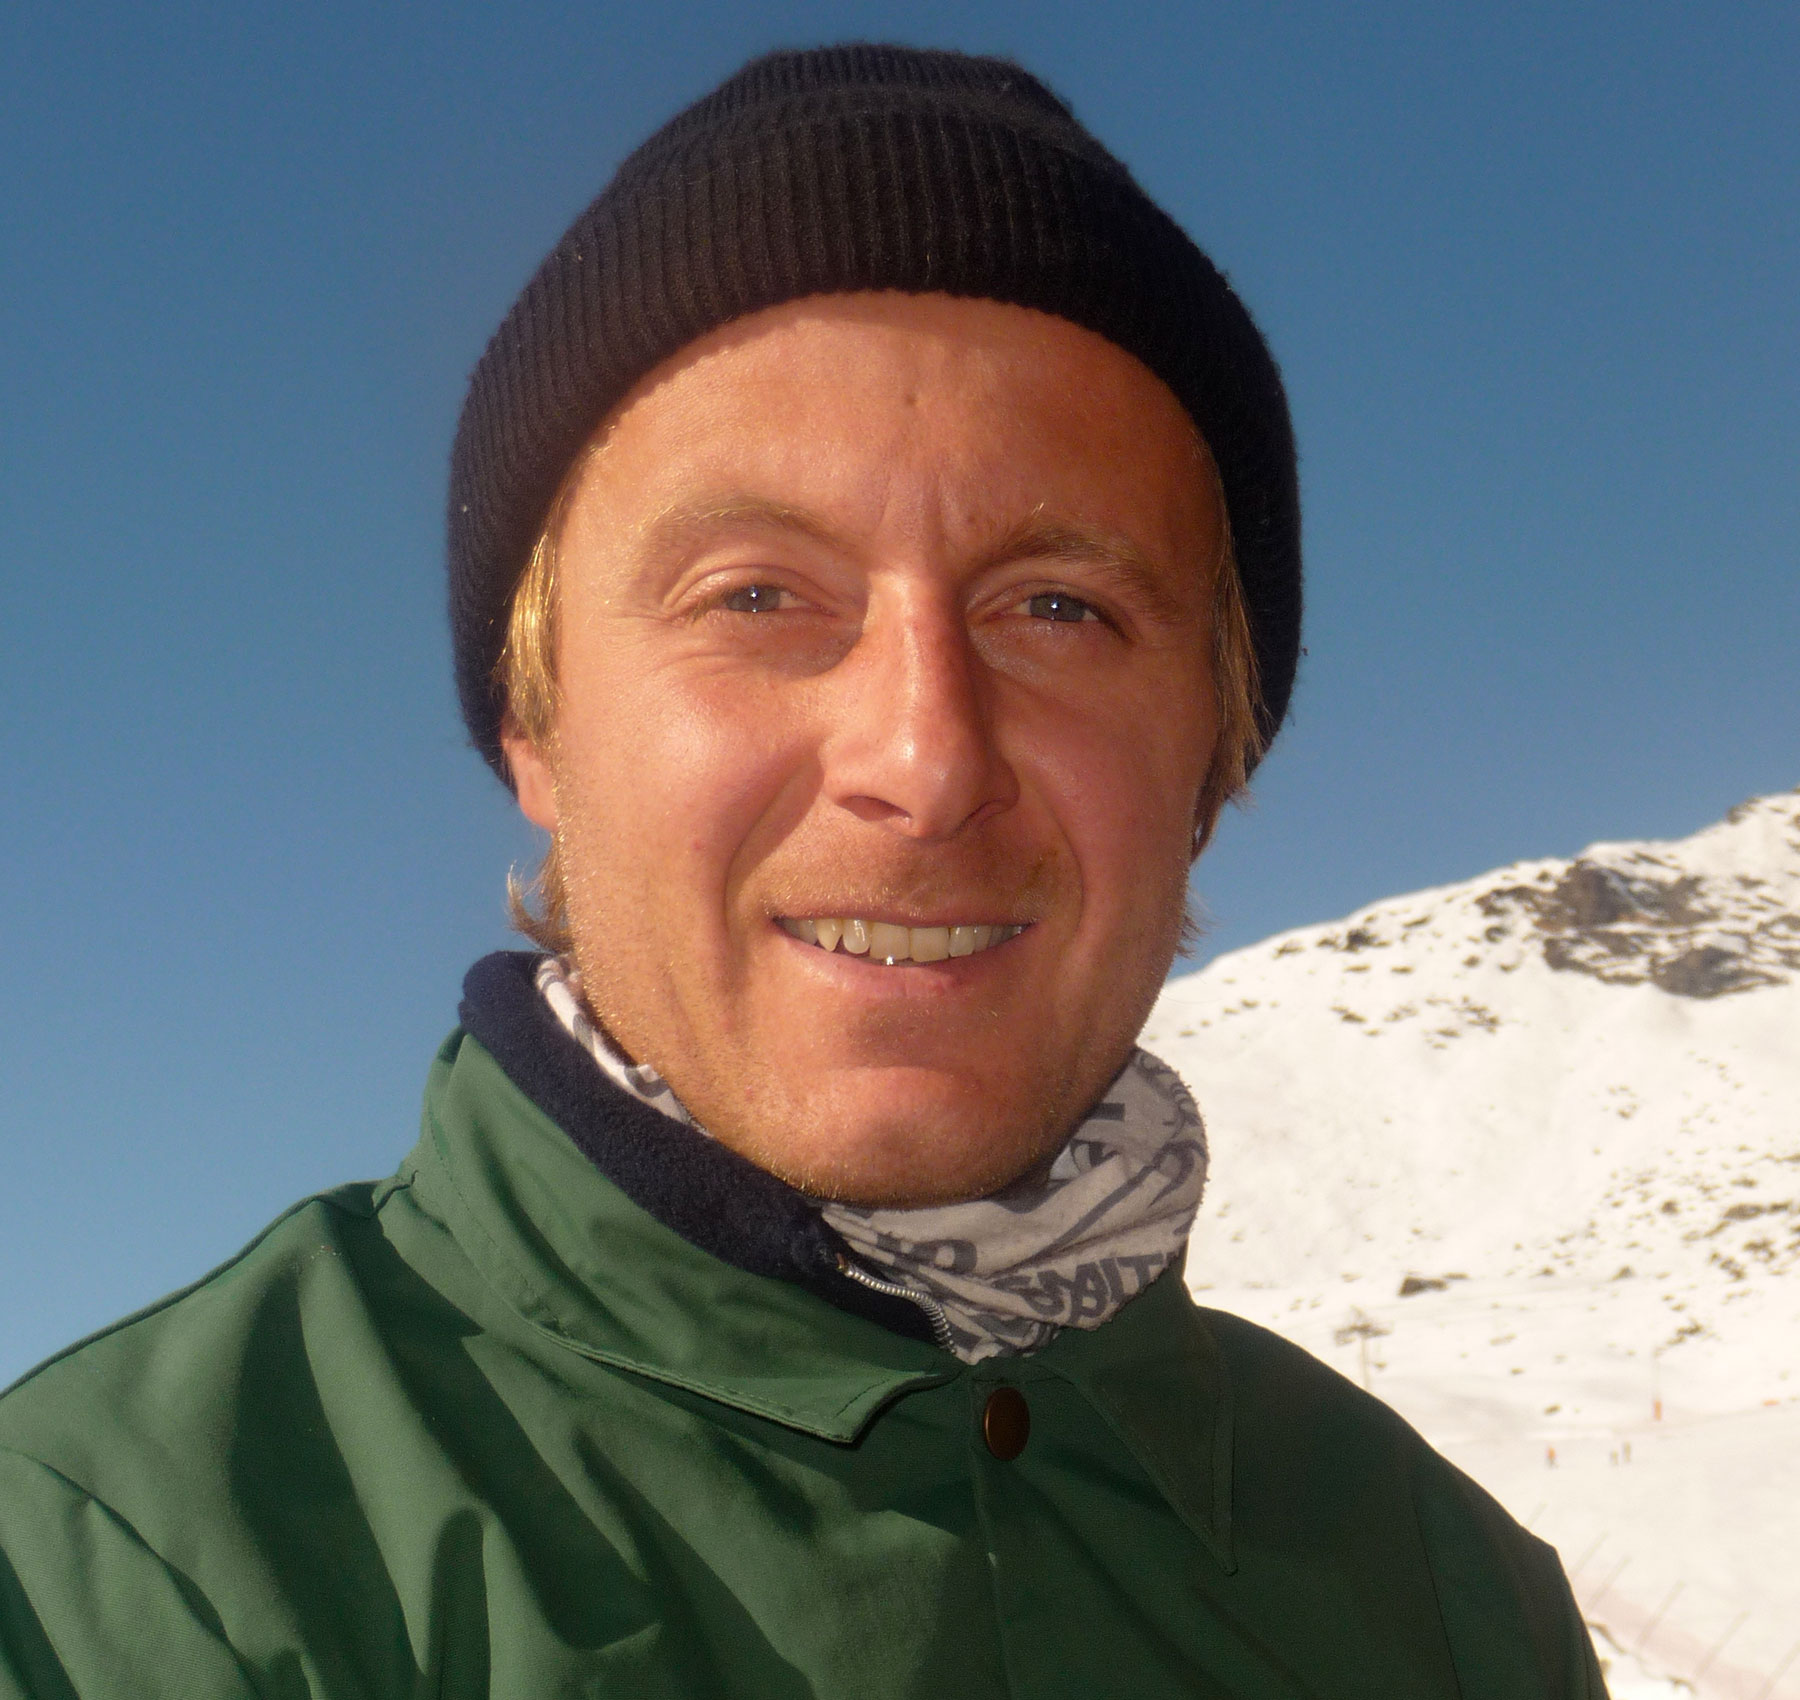 Quentin-val-thorens-ski-instructor’